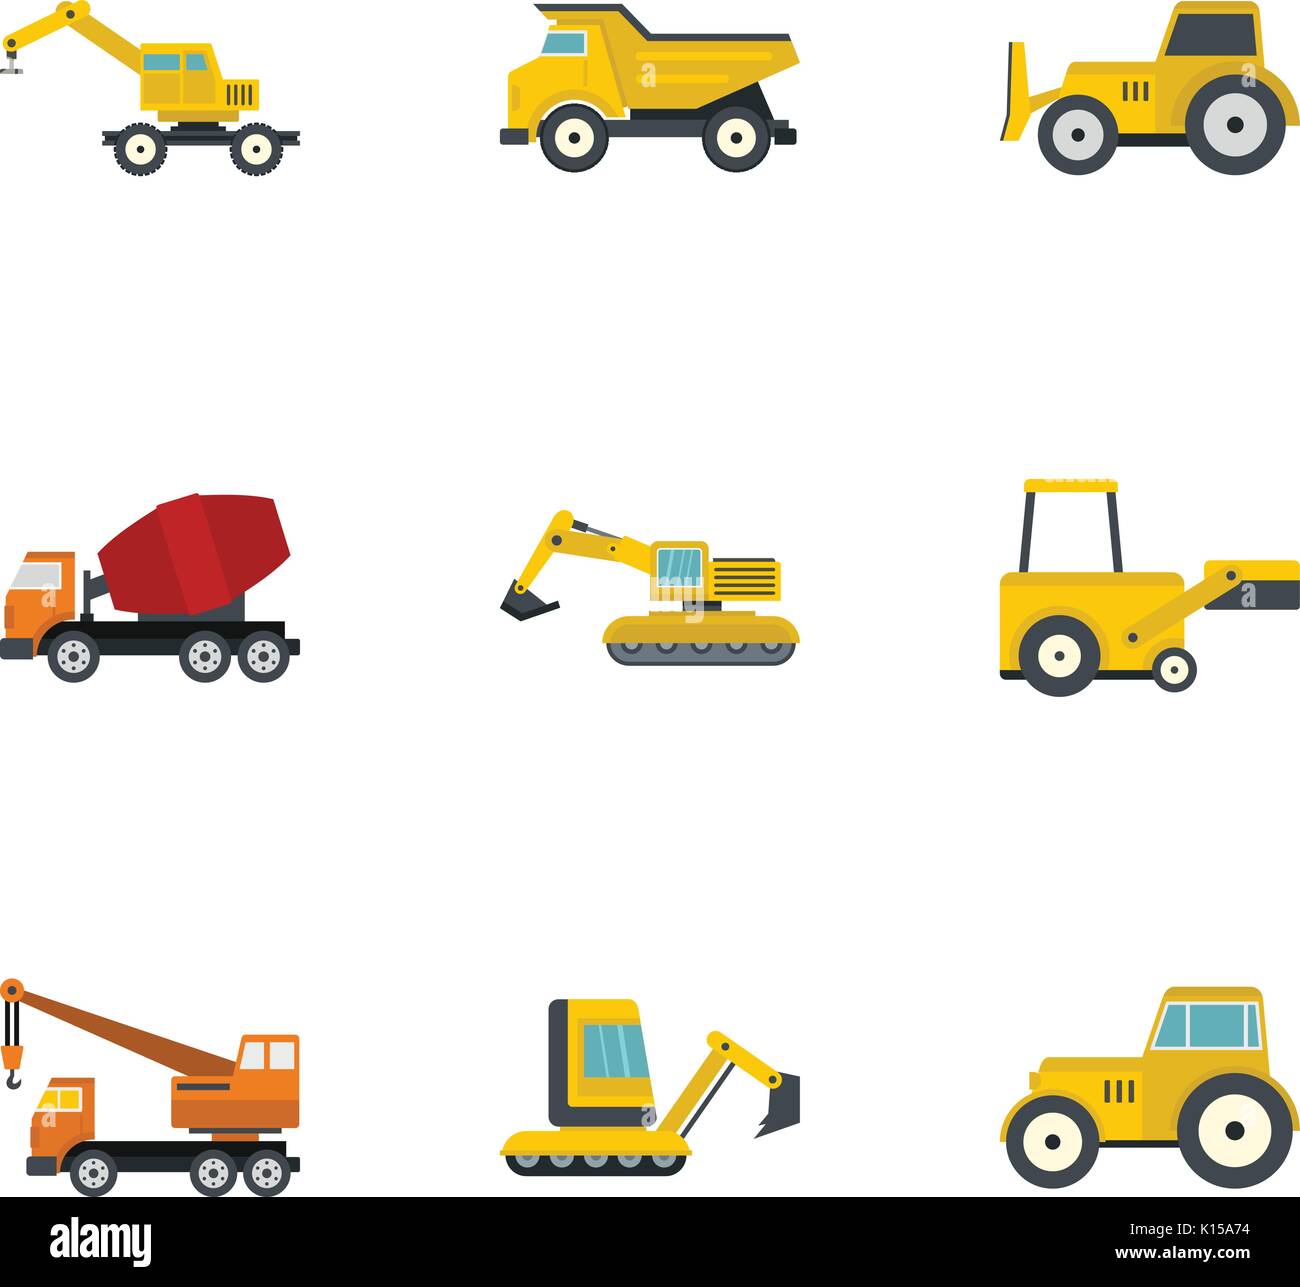 Construction heavy vehicle icon set, flat style Stock Vector